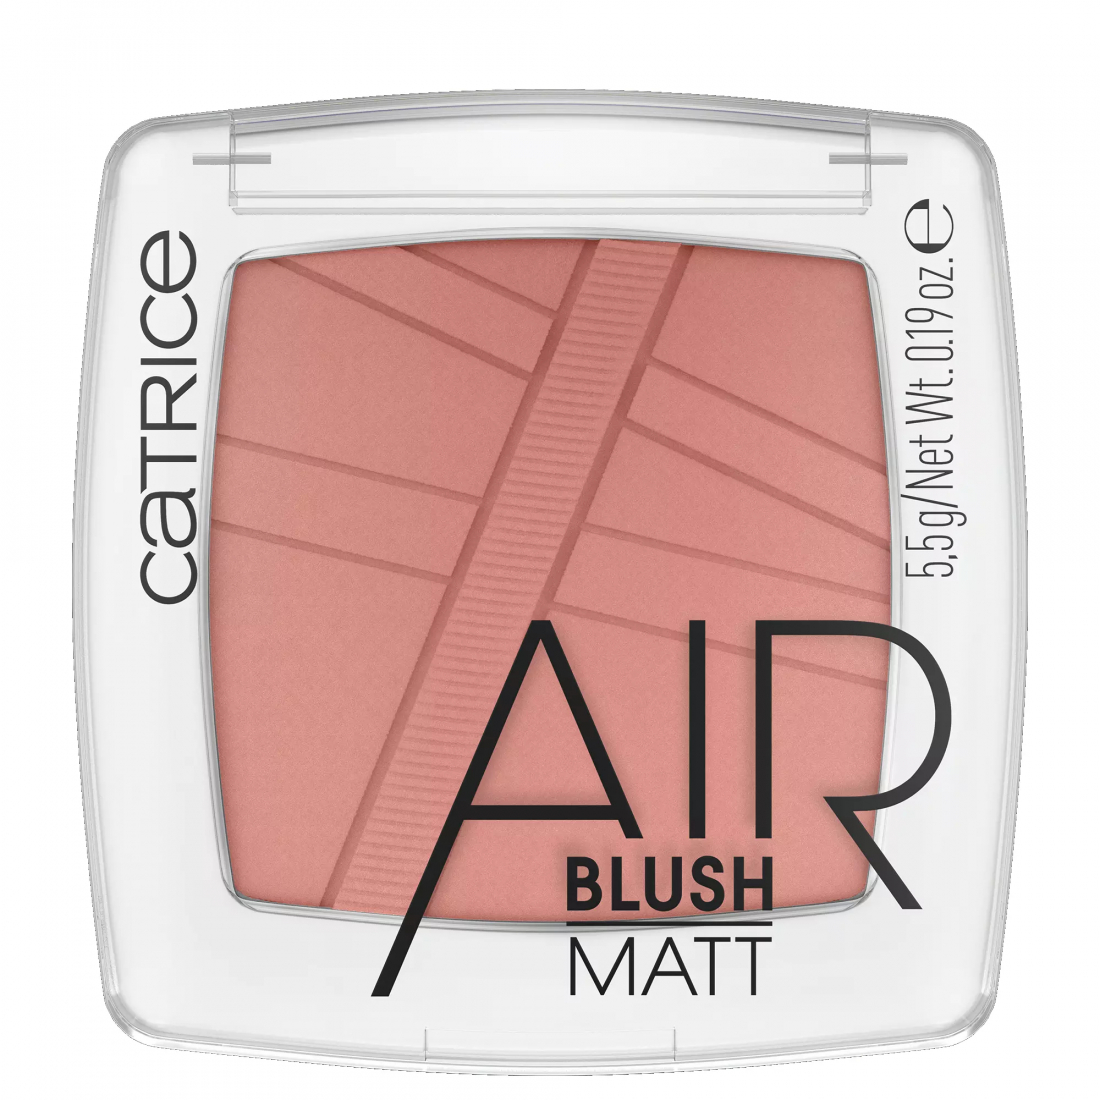 'Airblush Glow Matte' Blush - 130 Spice Space 5.5 g